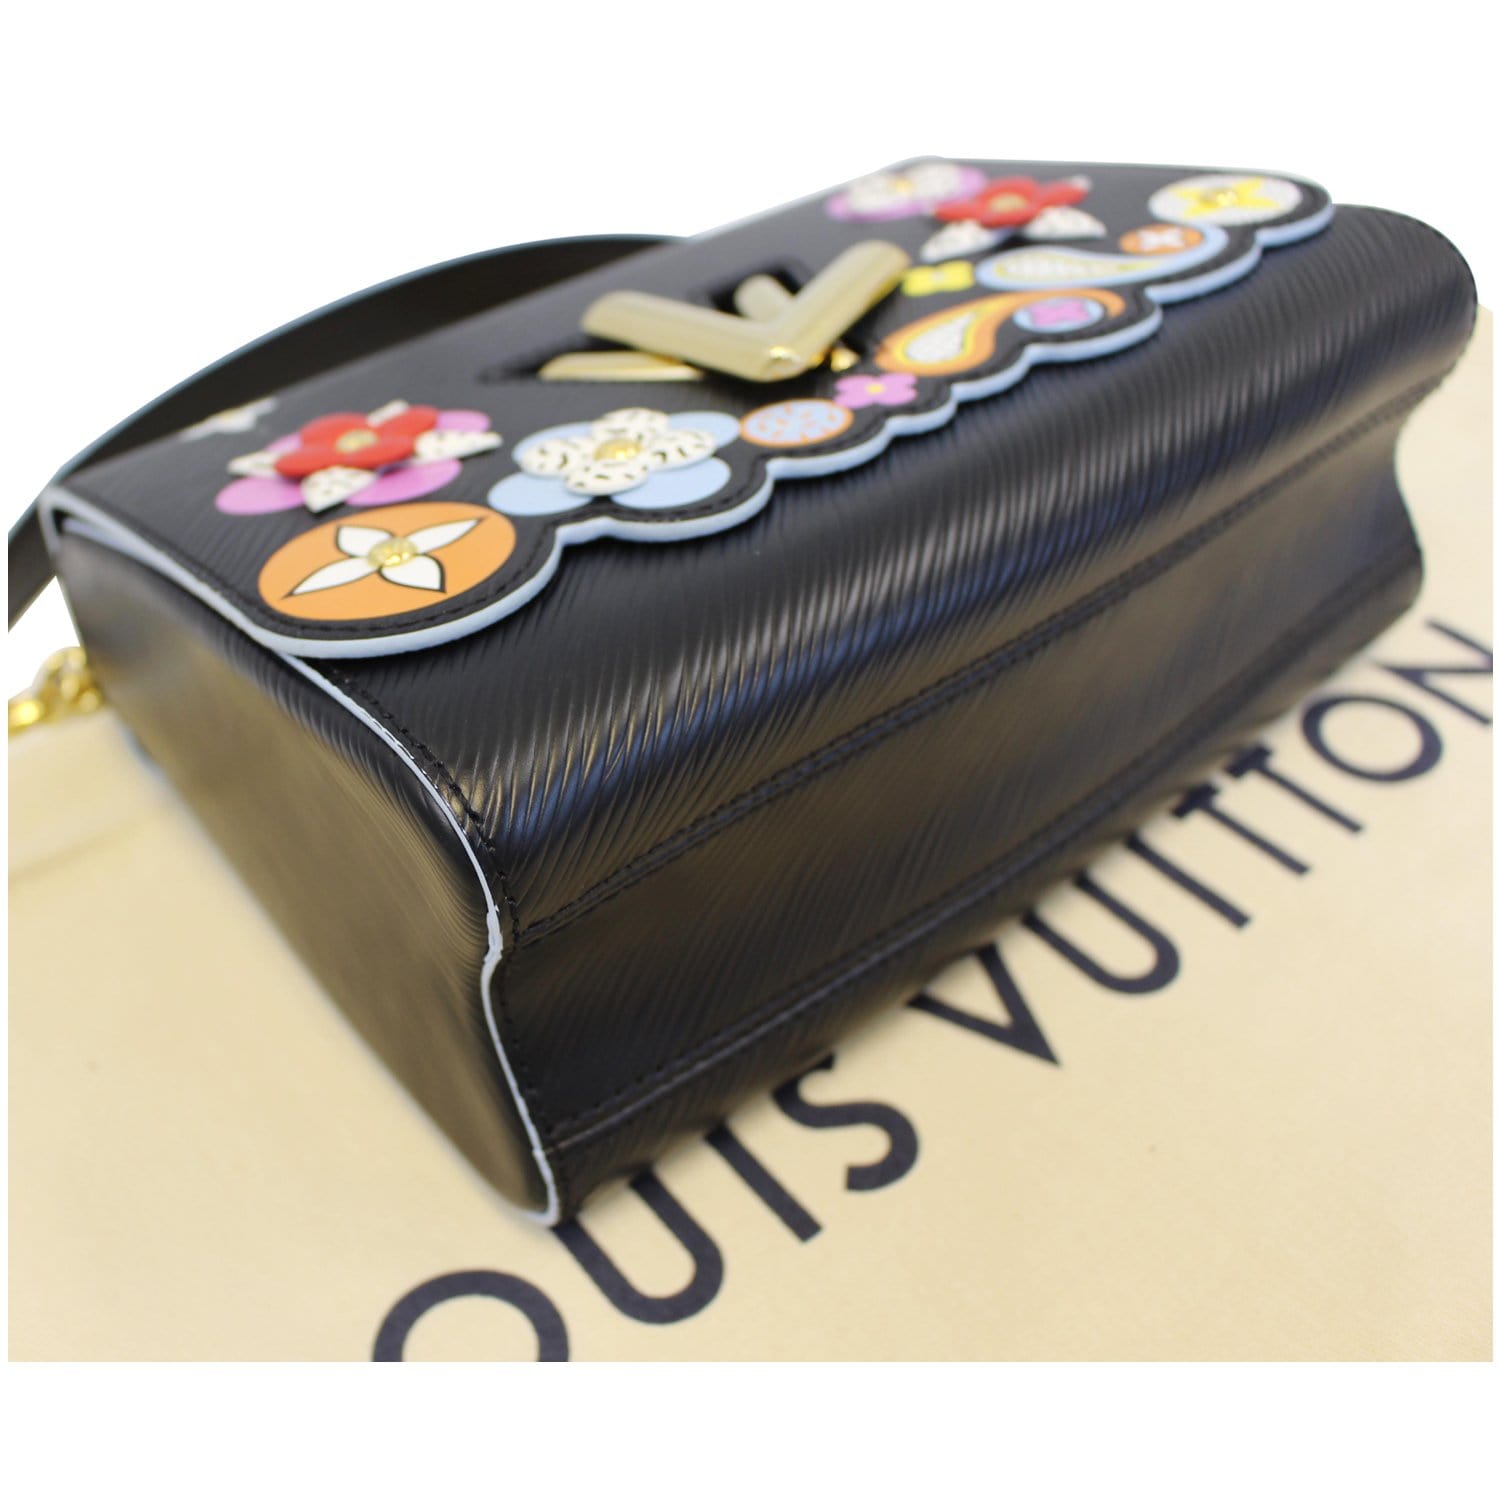 Louis Vuitton Black/Red Epi Leather Floral Motif Twist MM Bag at